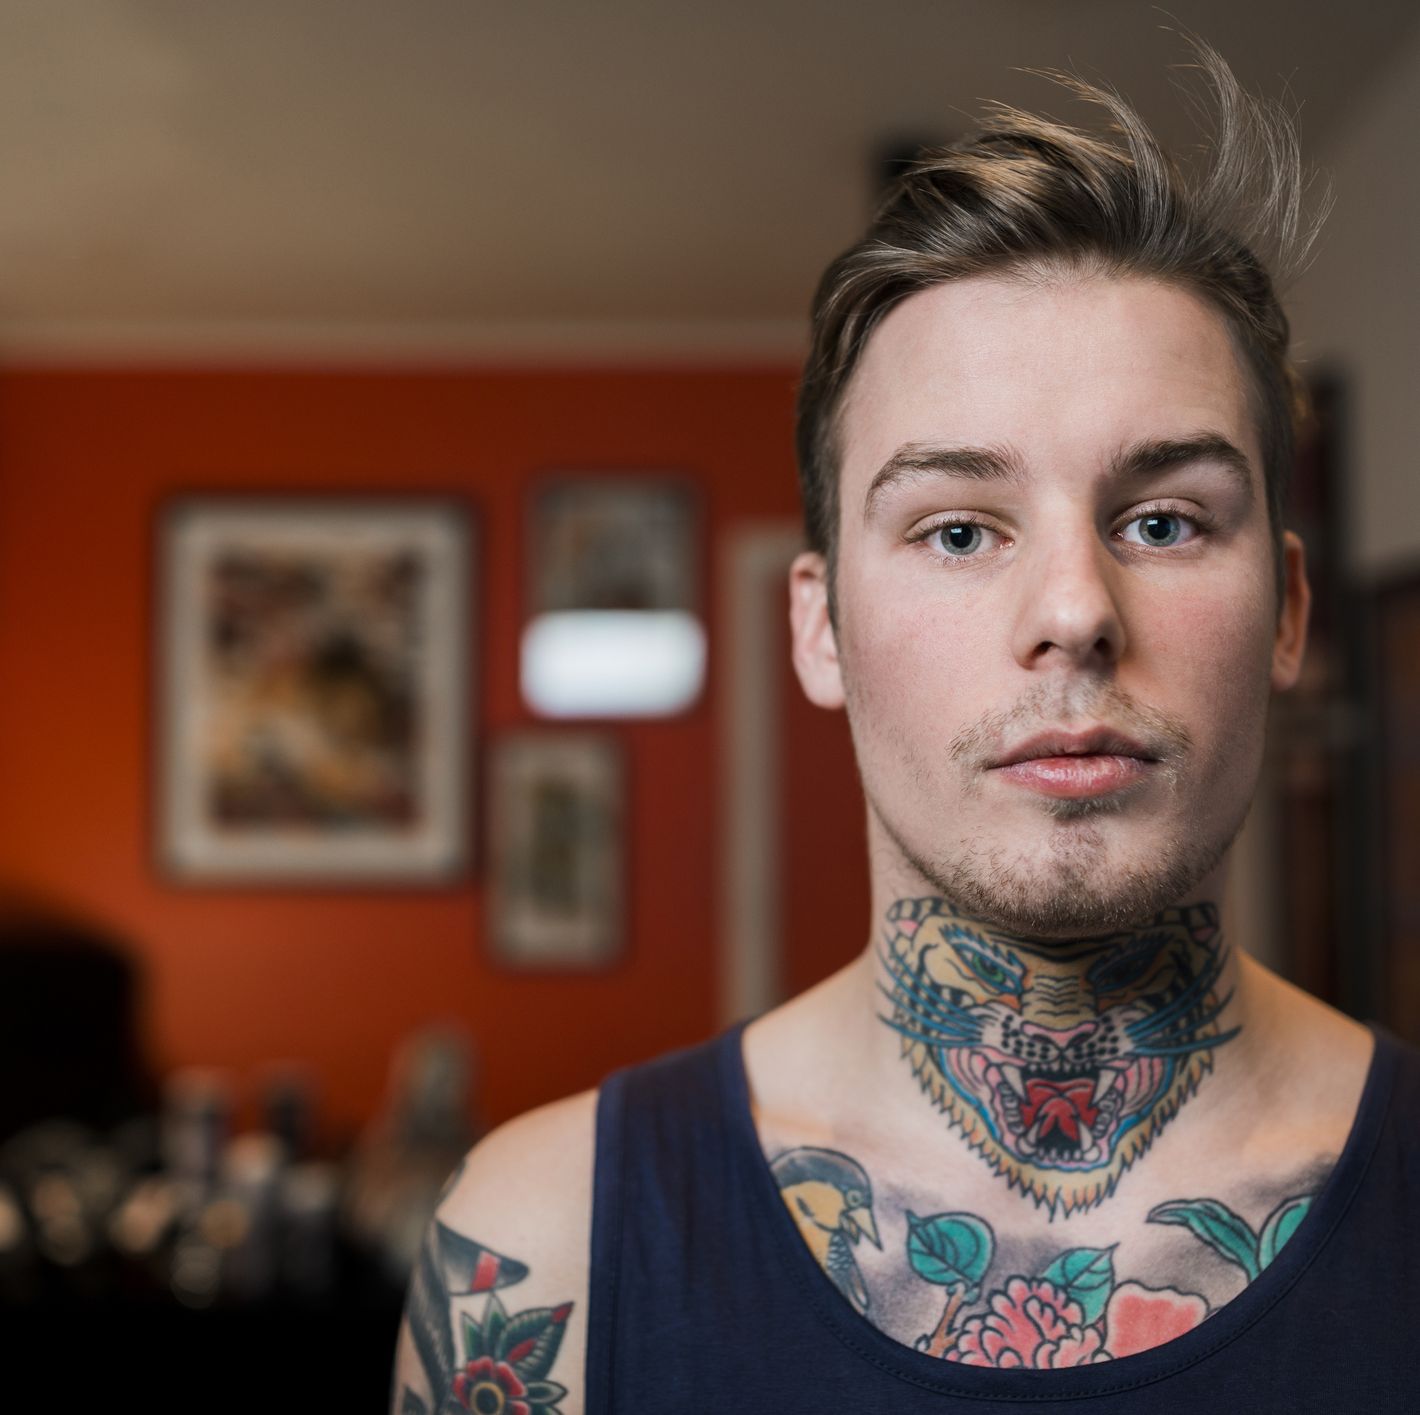 tattoo designs for men on back of neck